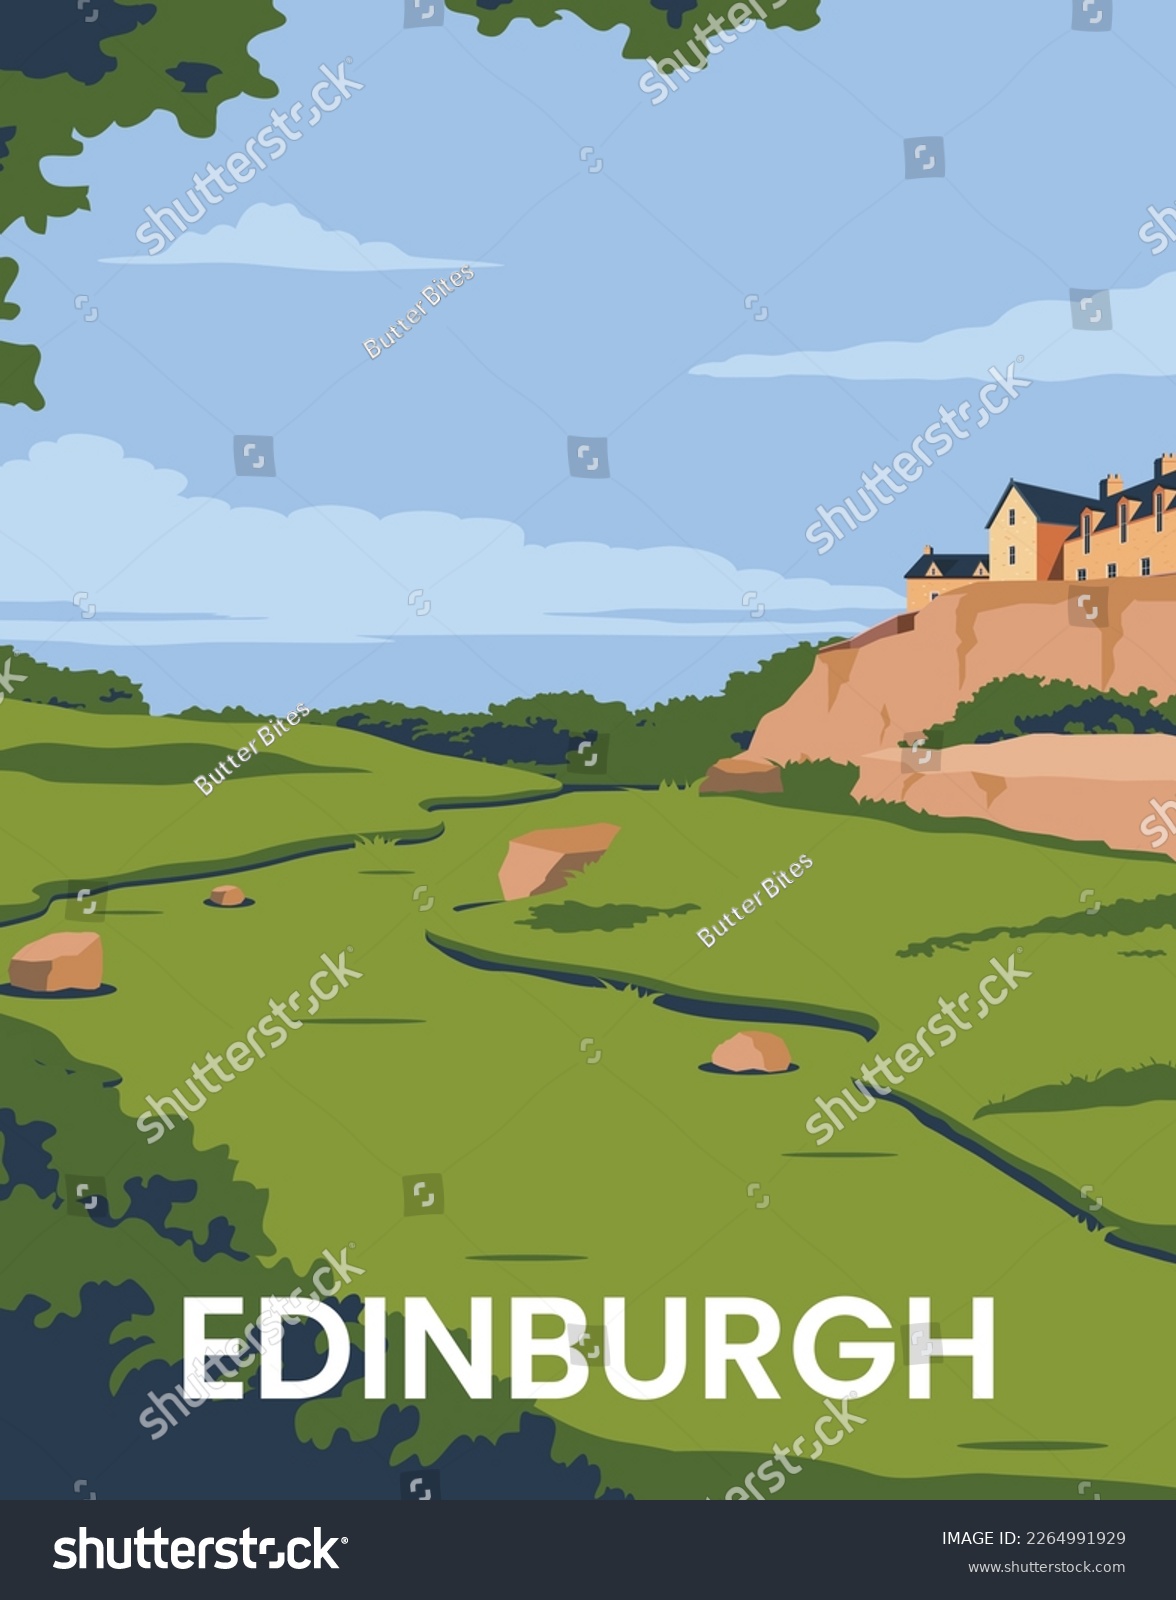 SVG of landscape background Old town Edinburgh in Scotland UK. vector illustration with colored style for poster, postcard, card, print. svg